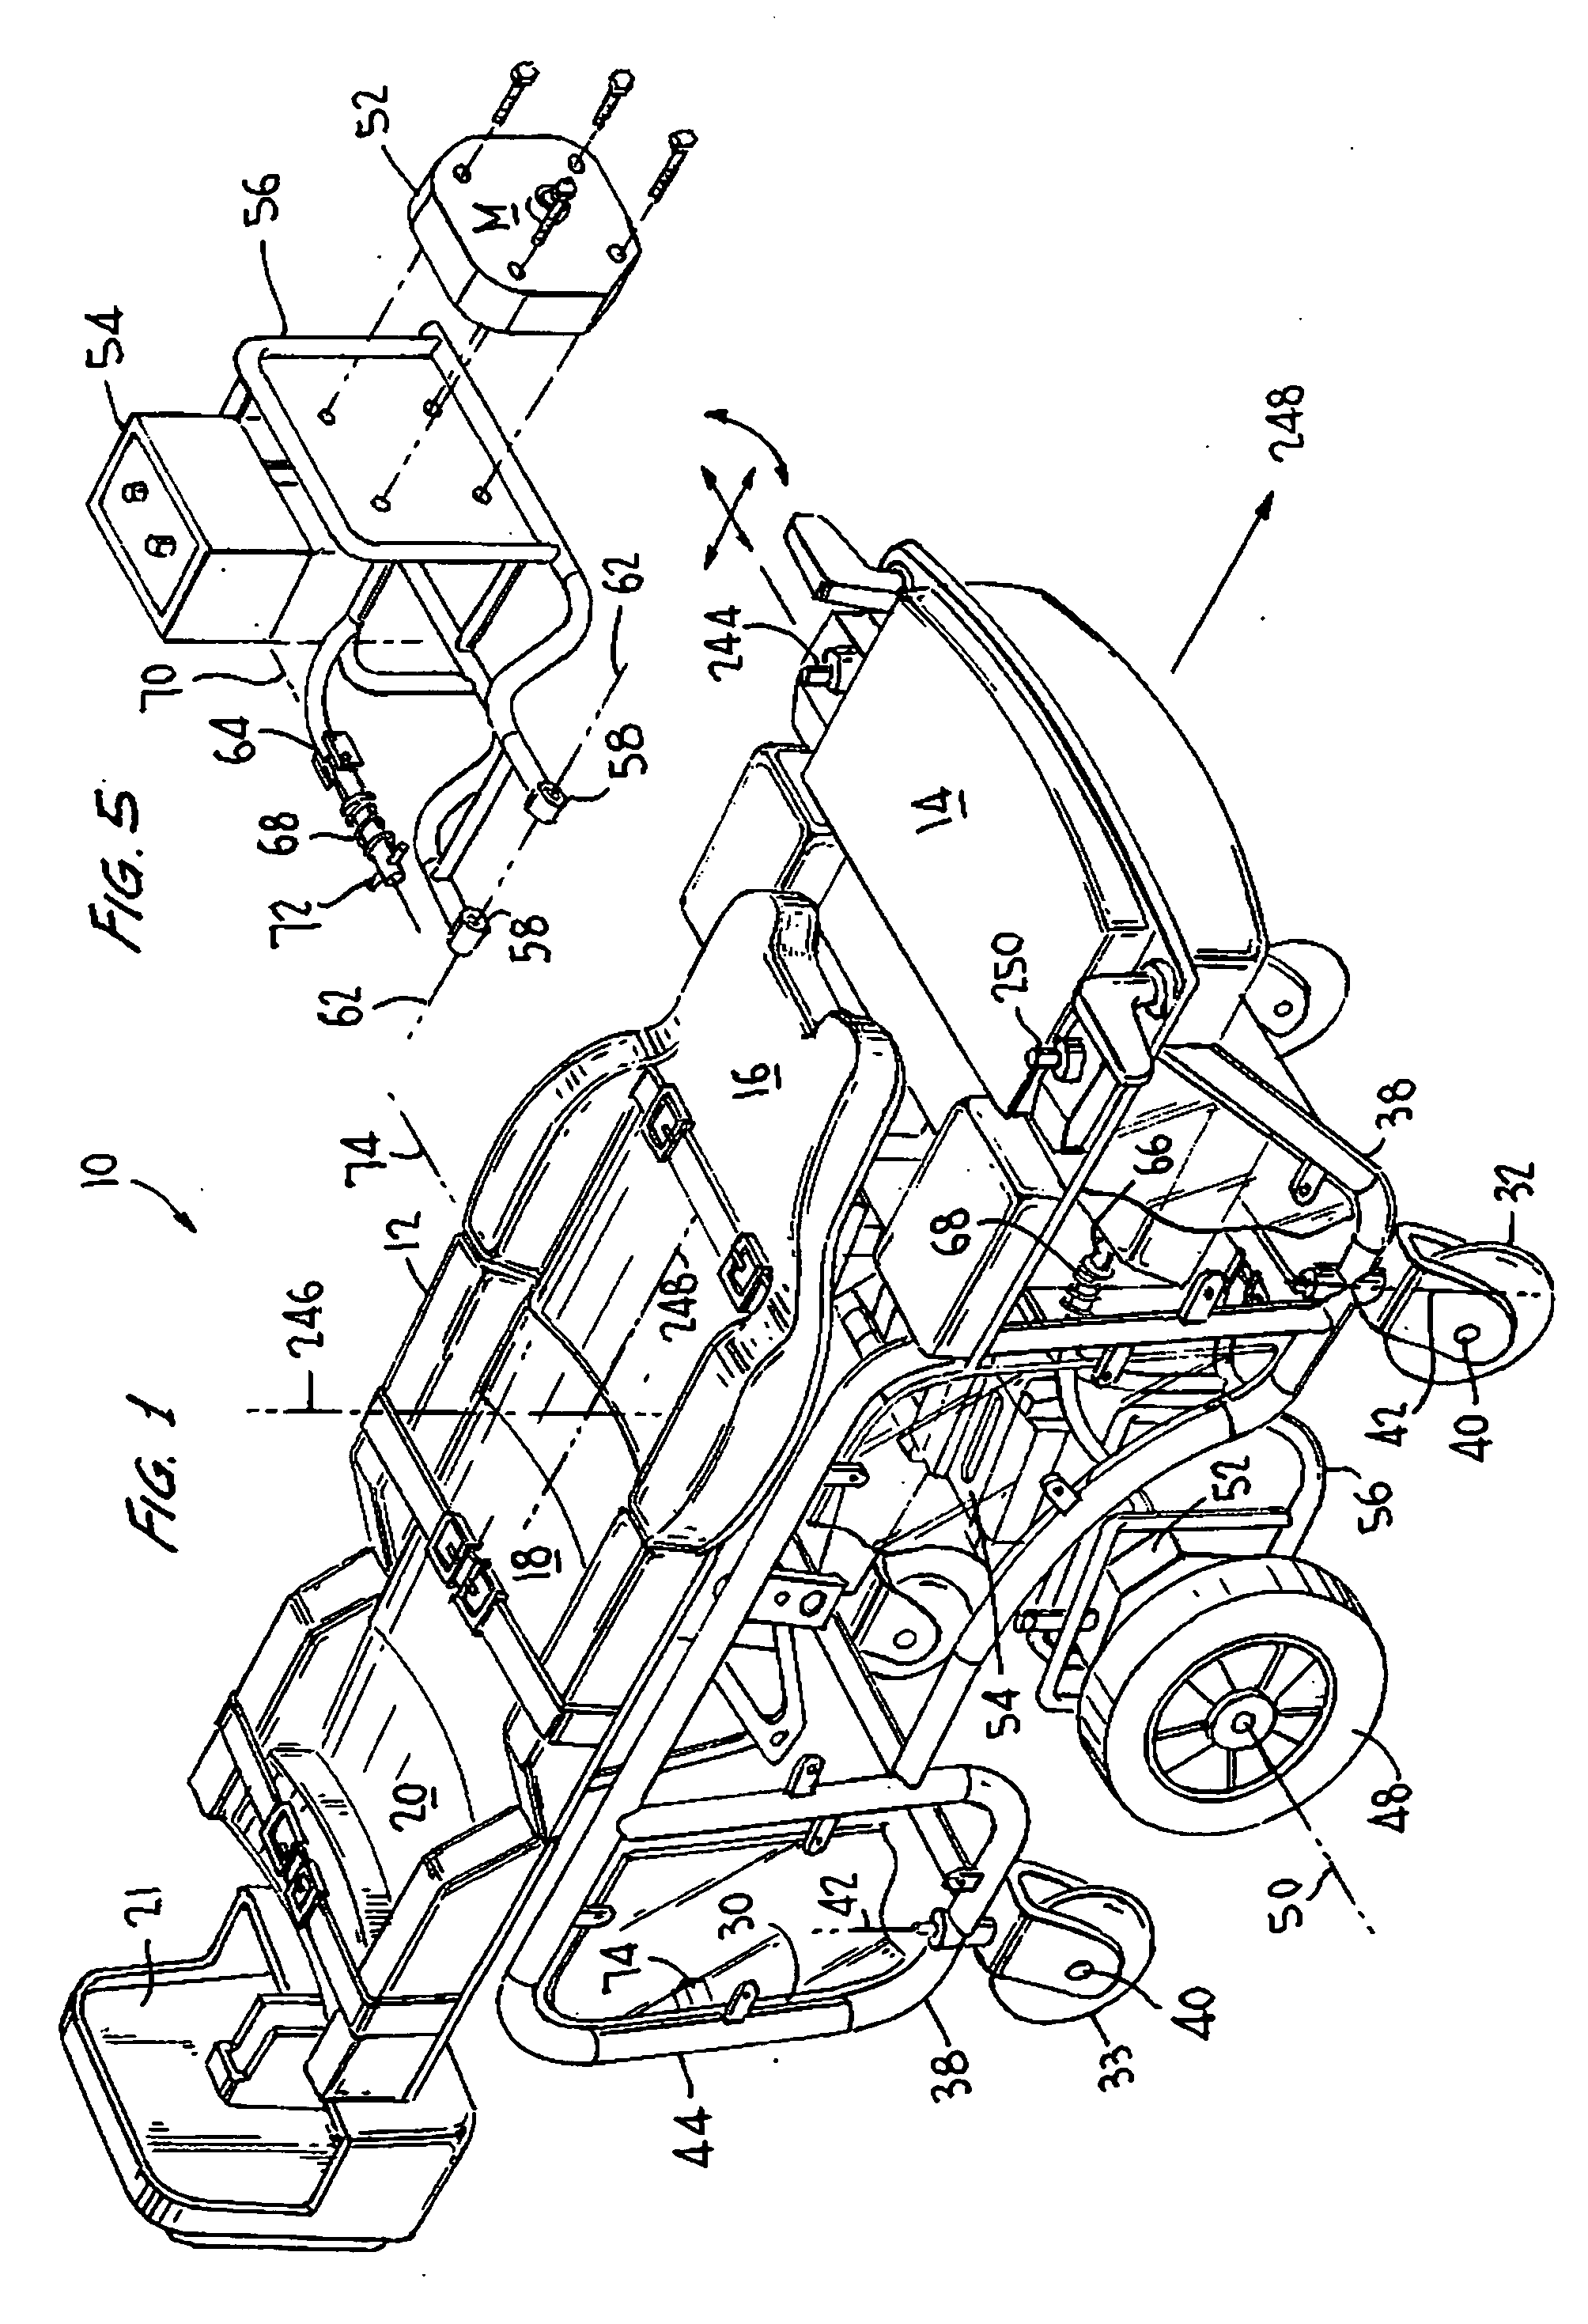 Folding frame motorized prone cart